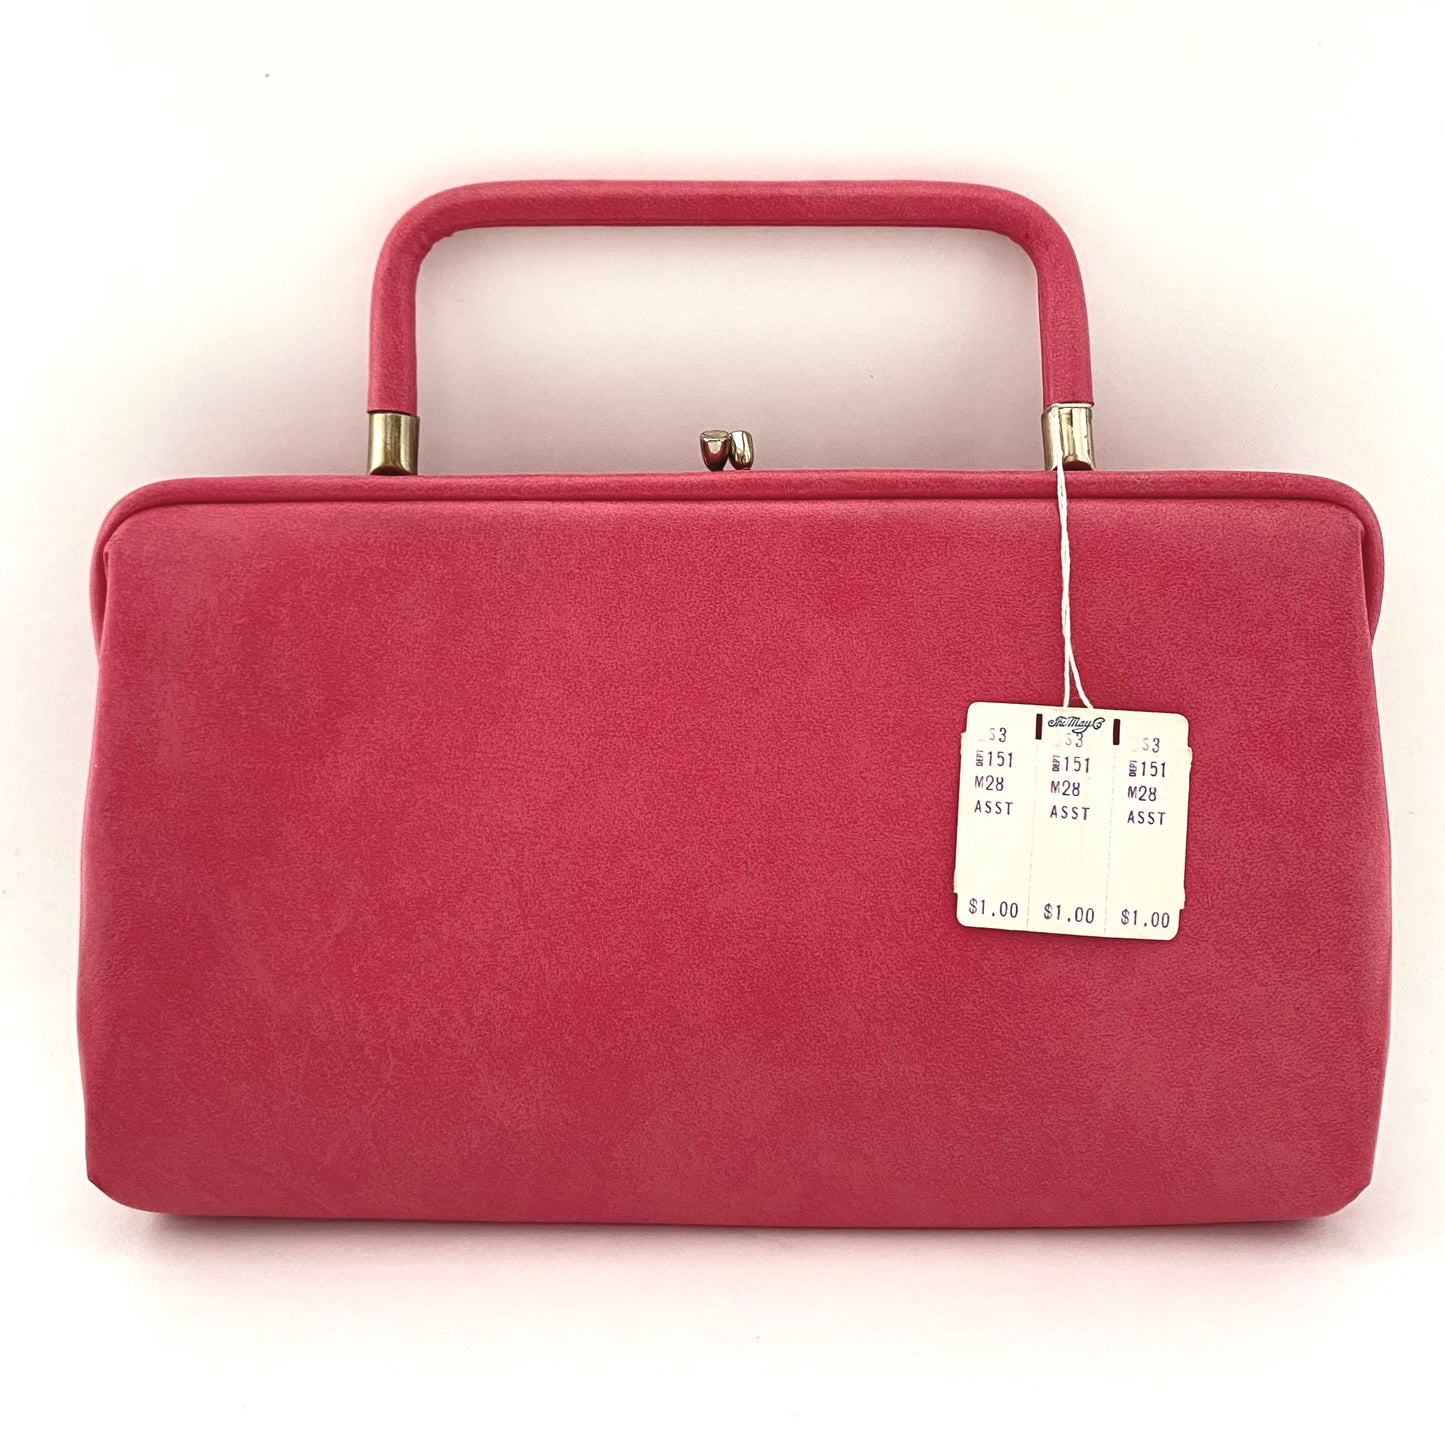 1960s Pink Clutch Handbag with Original Tags